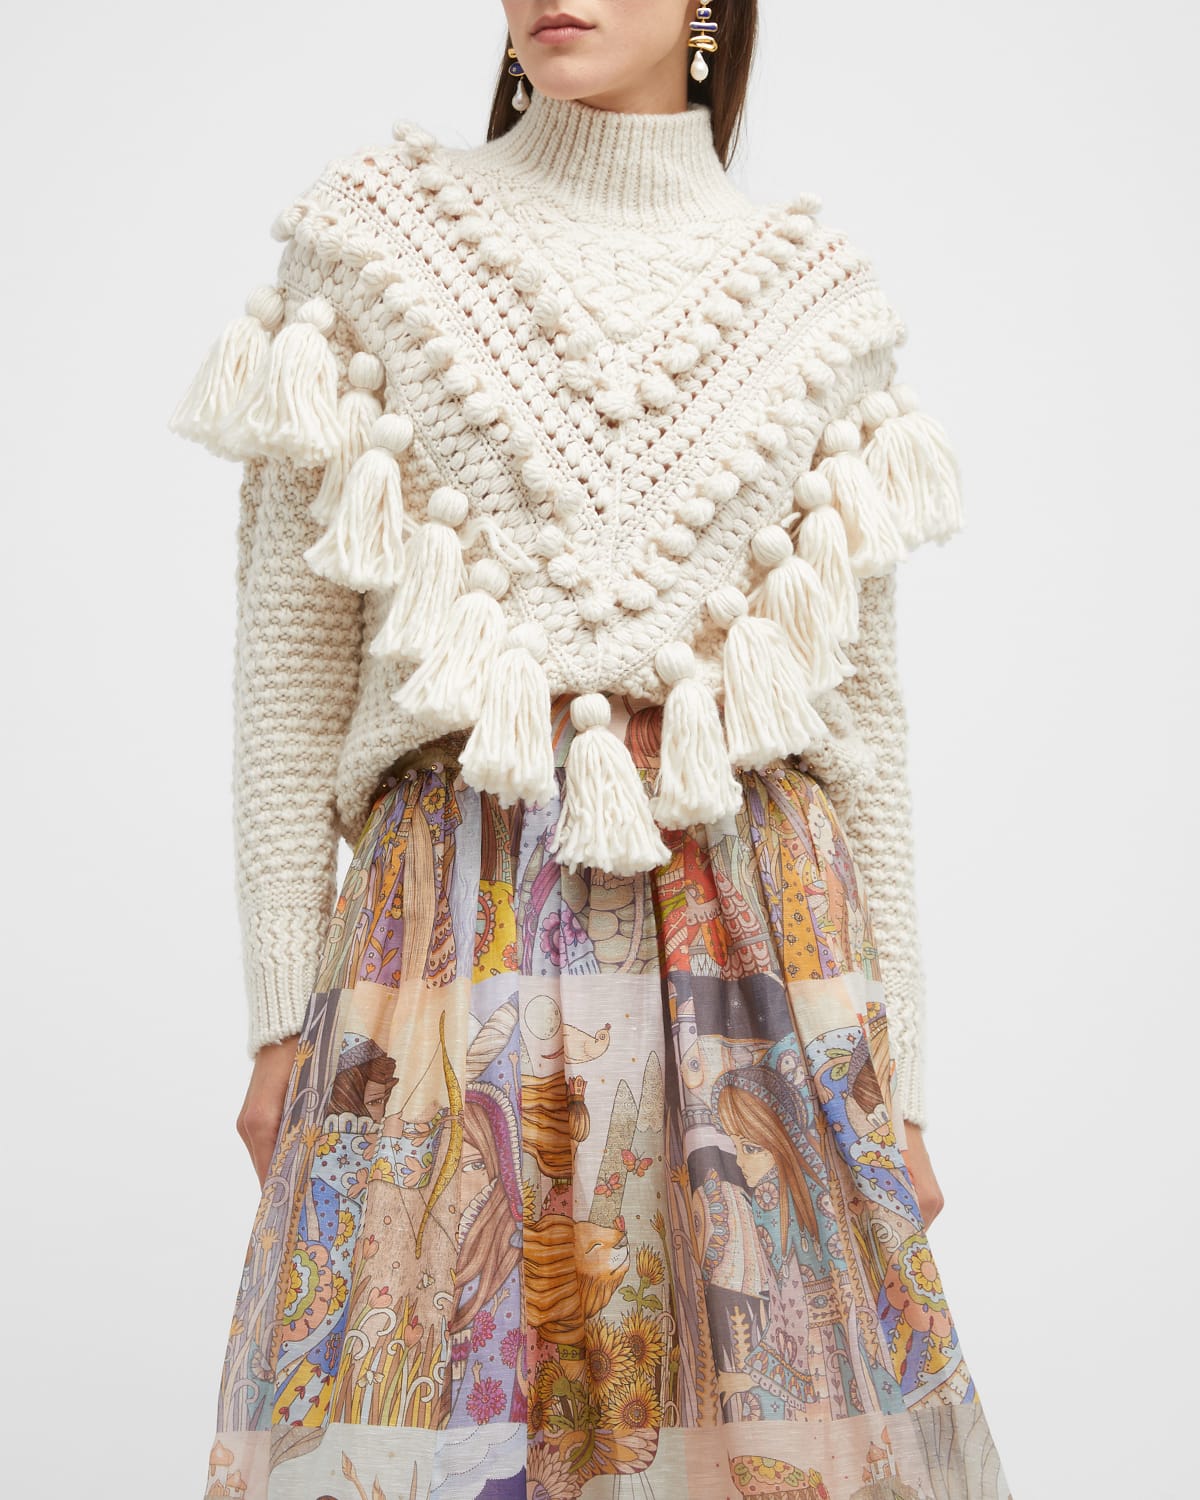 Crochet Tassel and Pom Pom Turtleneck Sweater